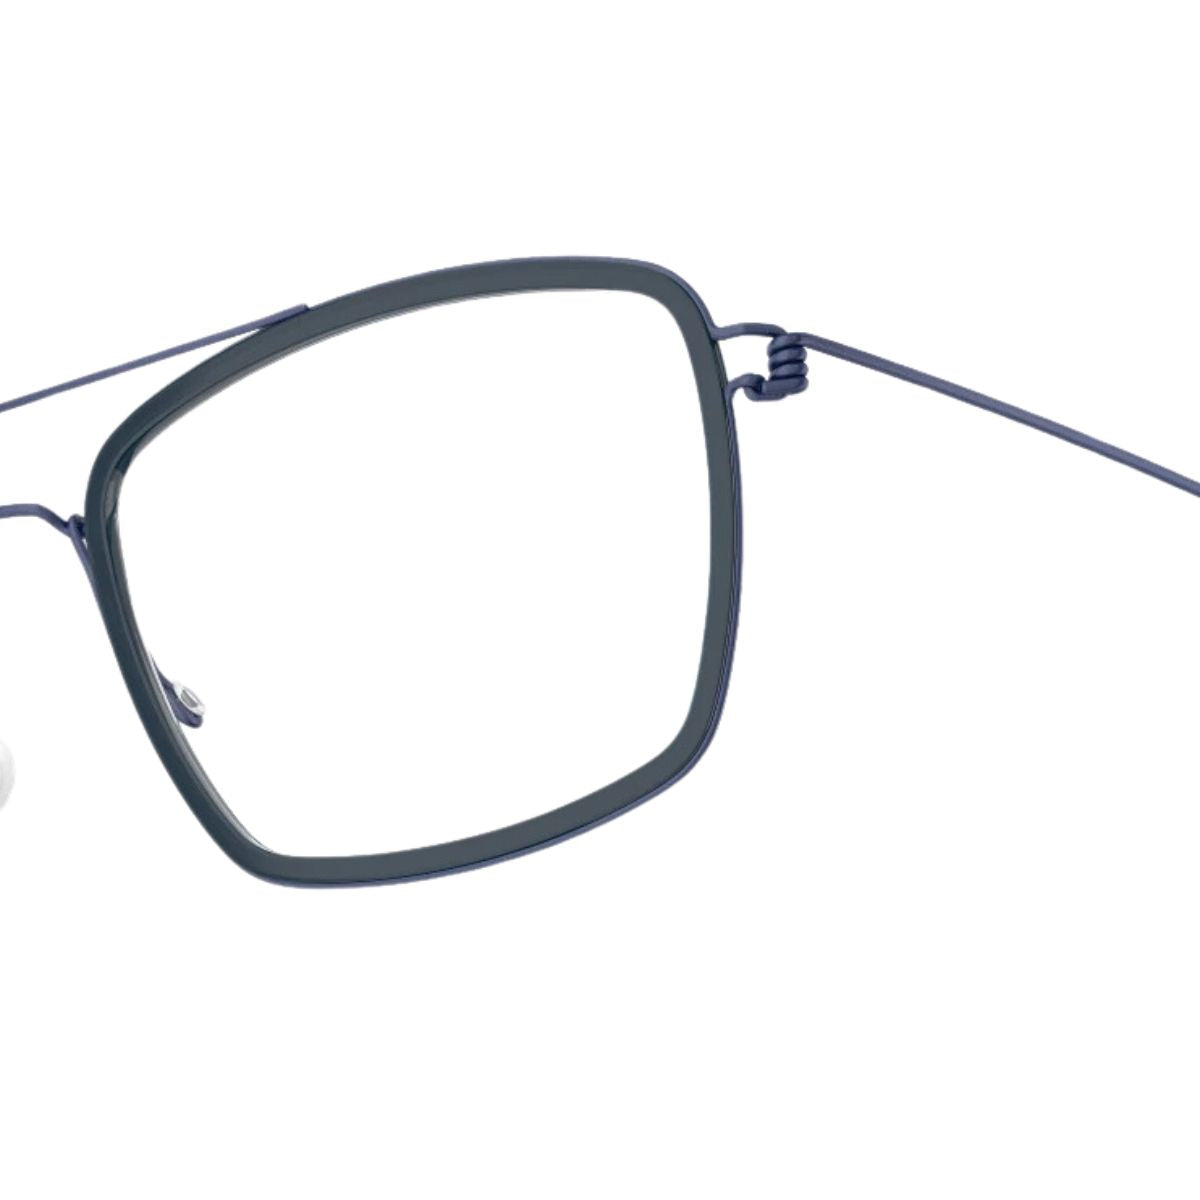 "Shop Latest Linberg Oscar Eyewear Square Optical Frames For Men & Women At Optorium"